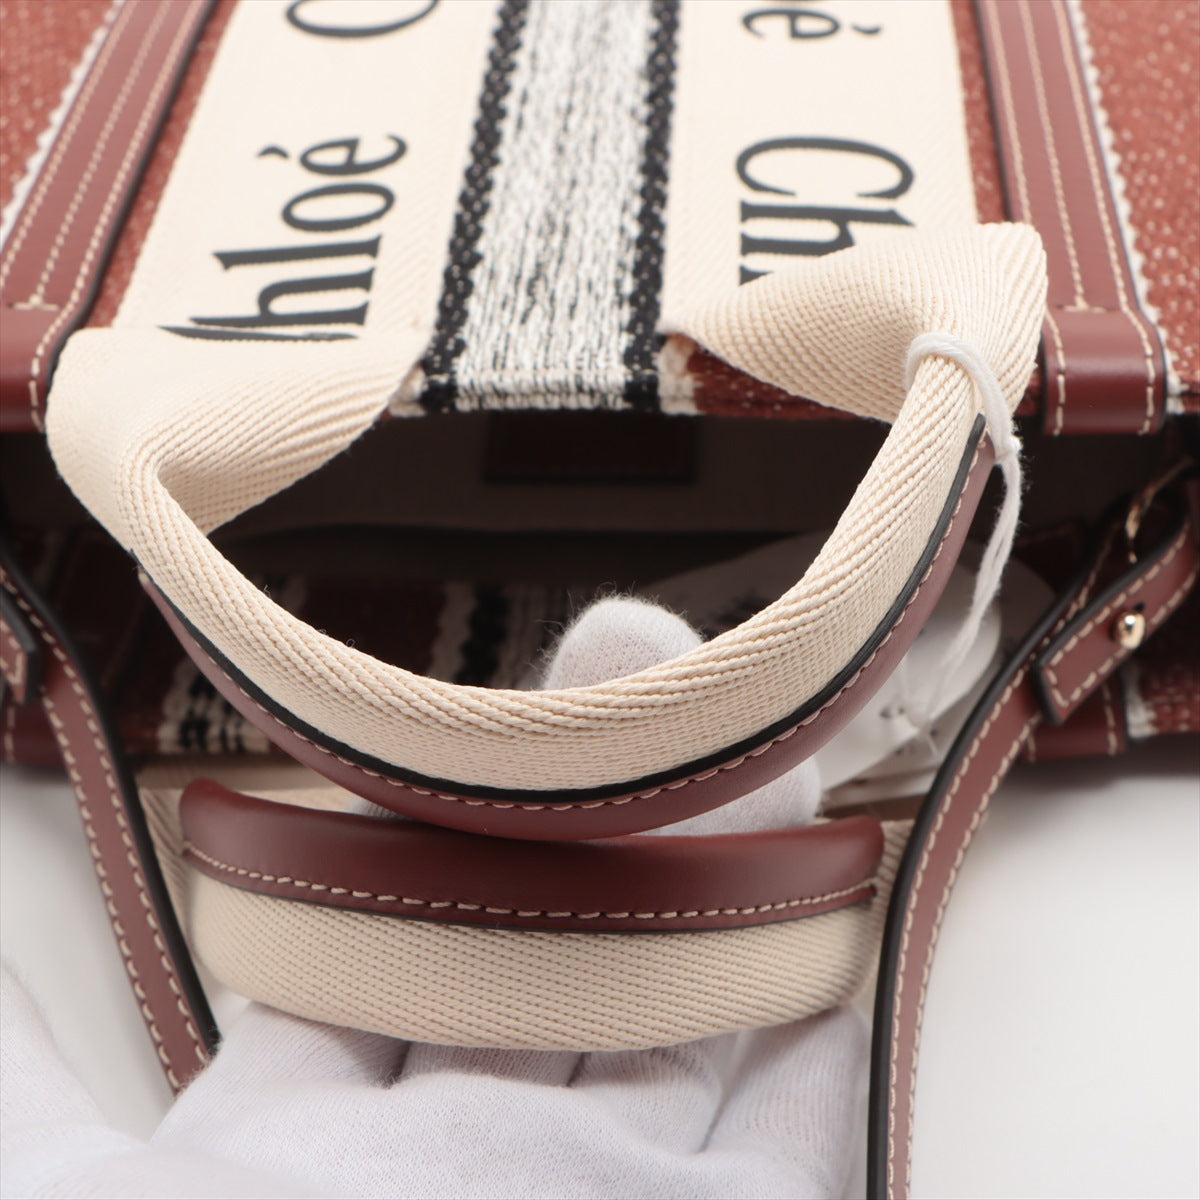 Chloe woody small Canvas & leather 2way handbag Brown